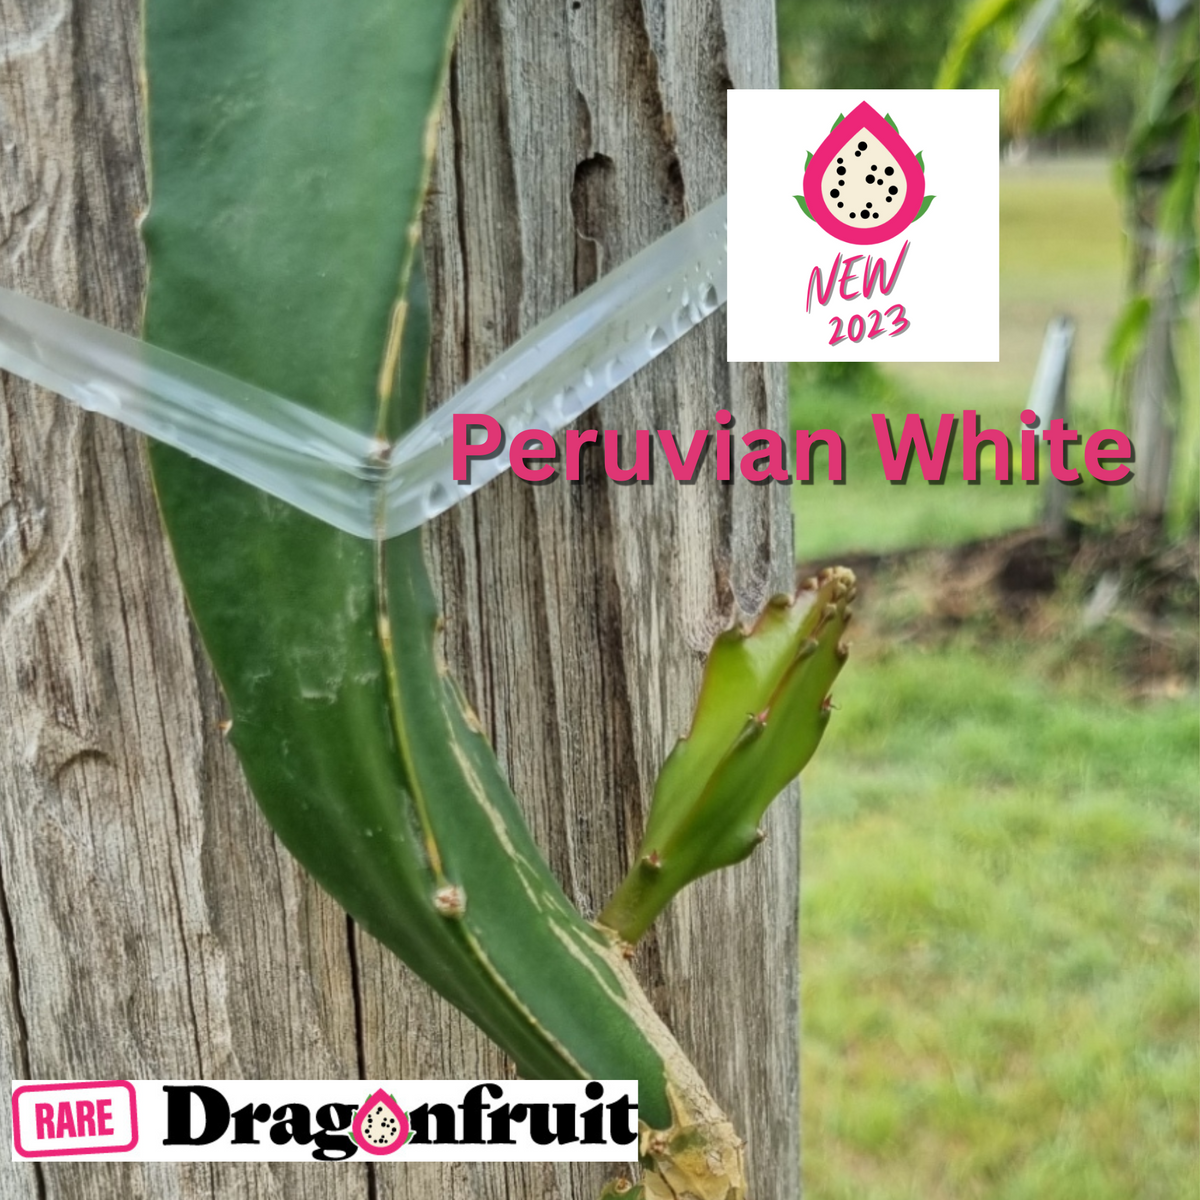 Peruvian white dragon fruit